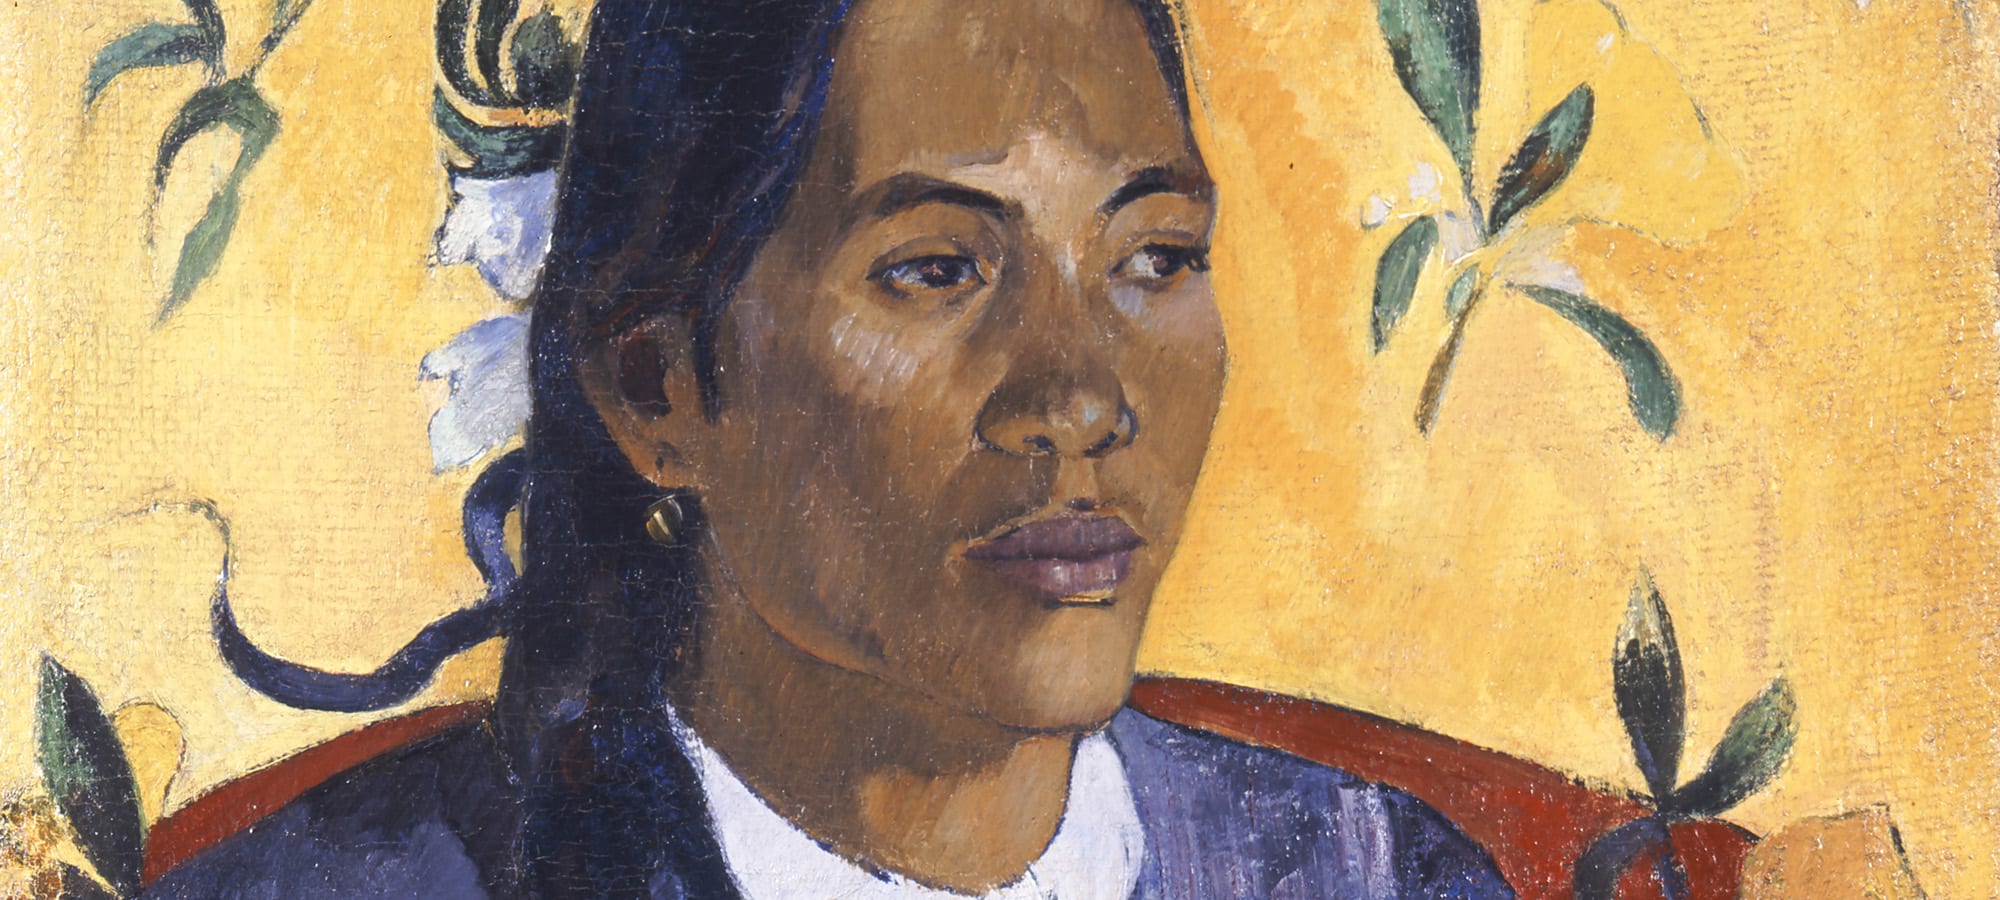 Paul Gauguin - Vahine no te tiare